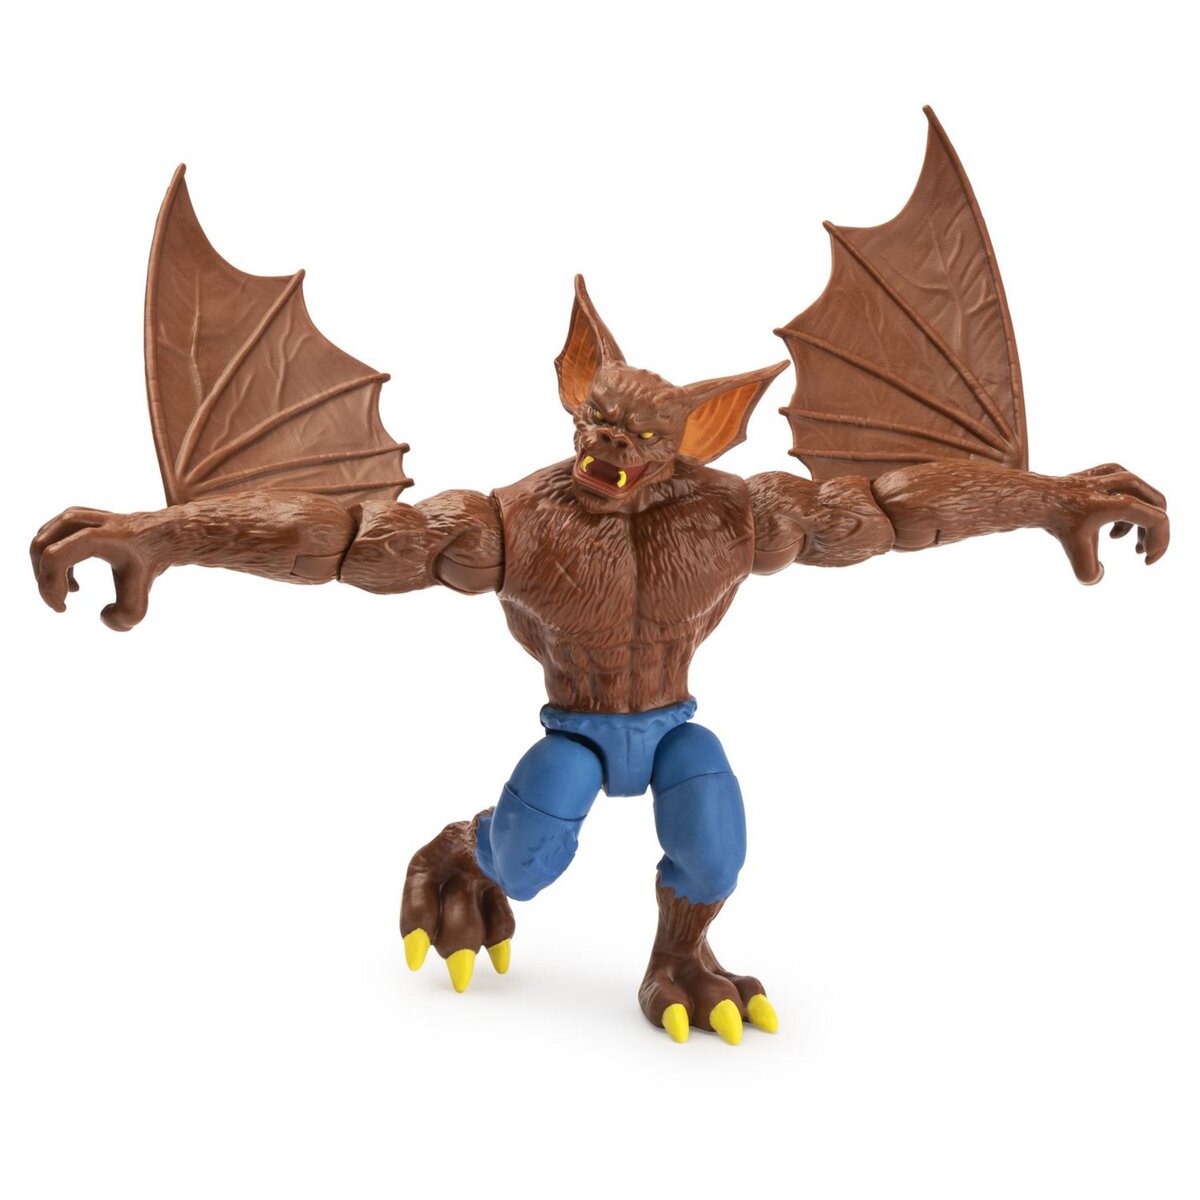 SPIN MASTER Figurine basique 10 cm Man-Bat